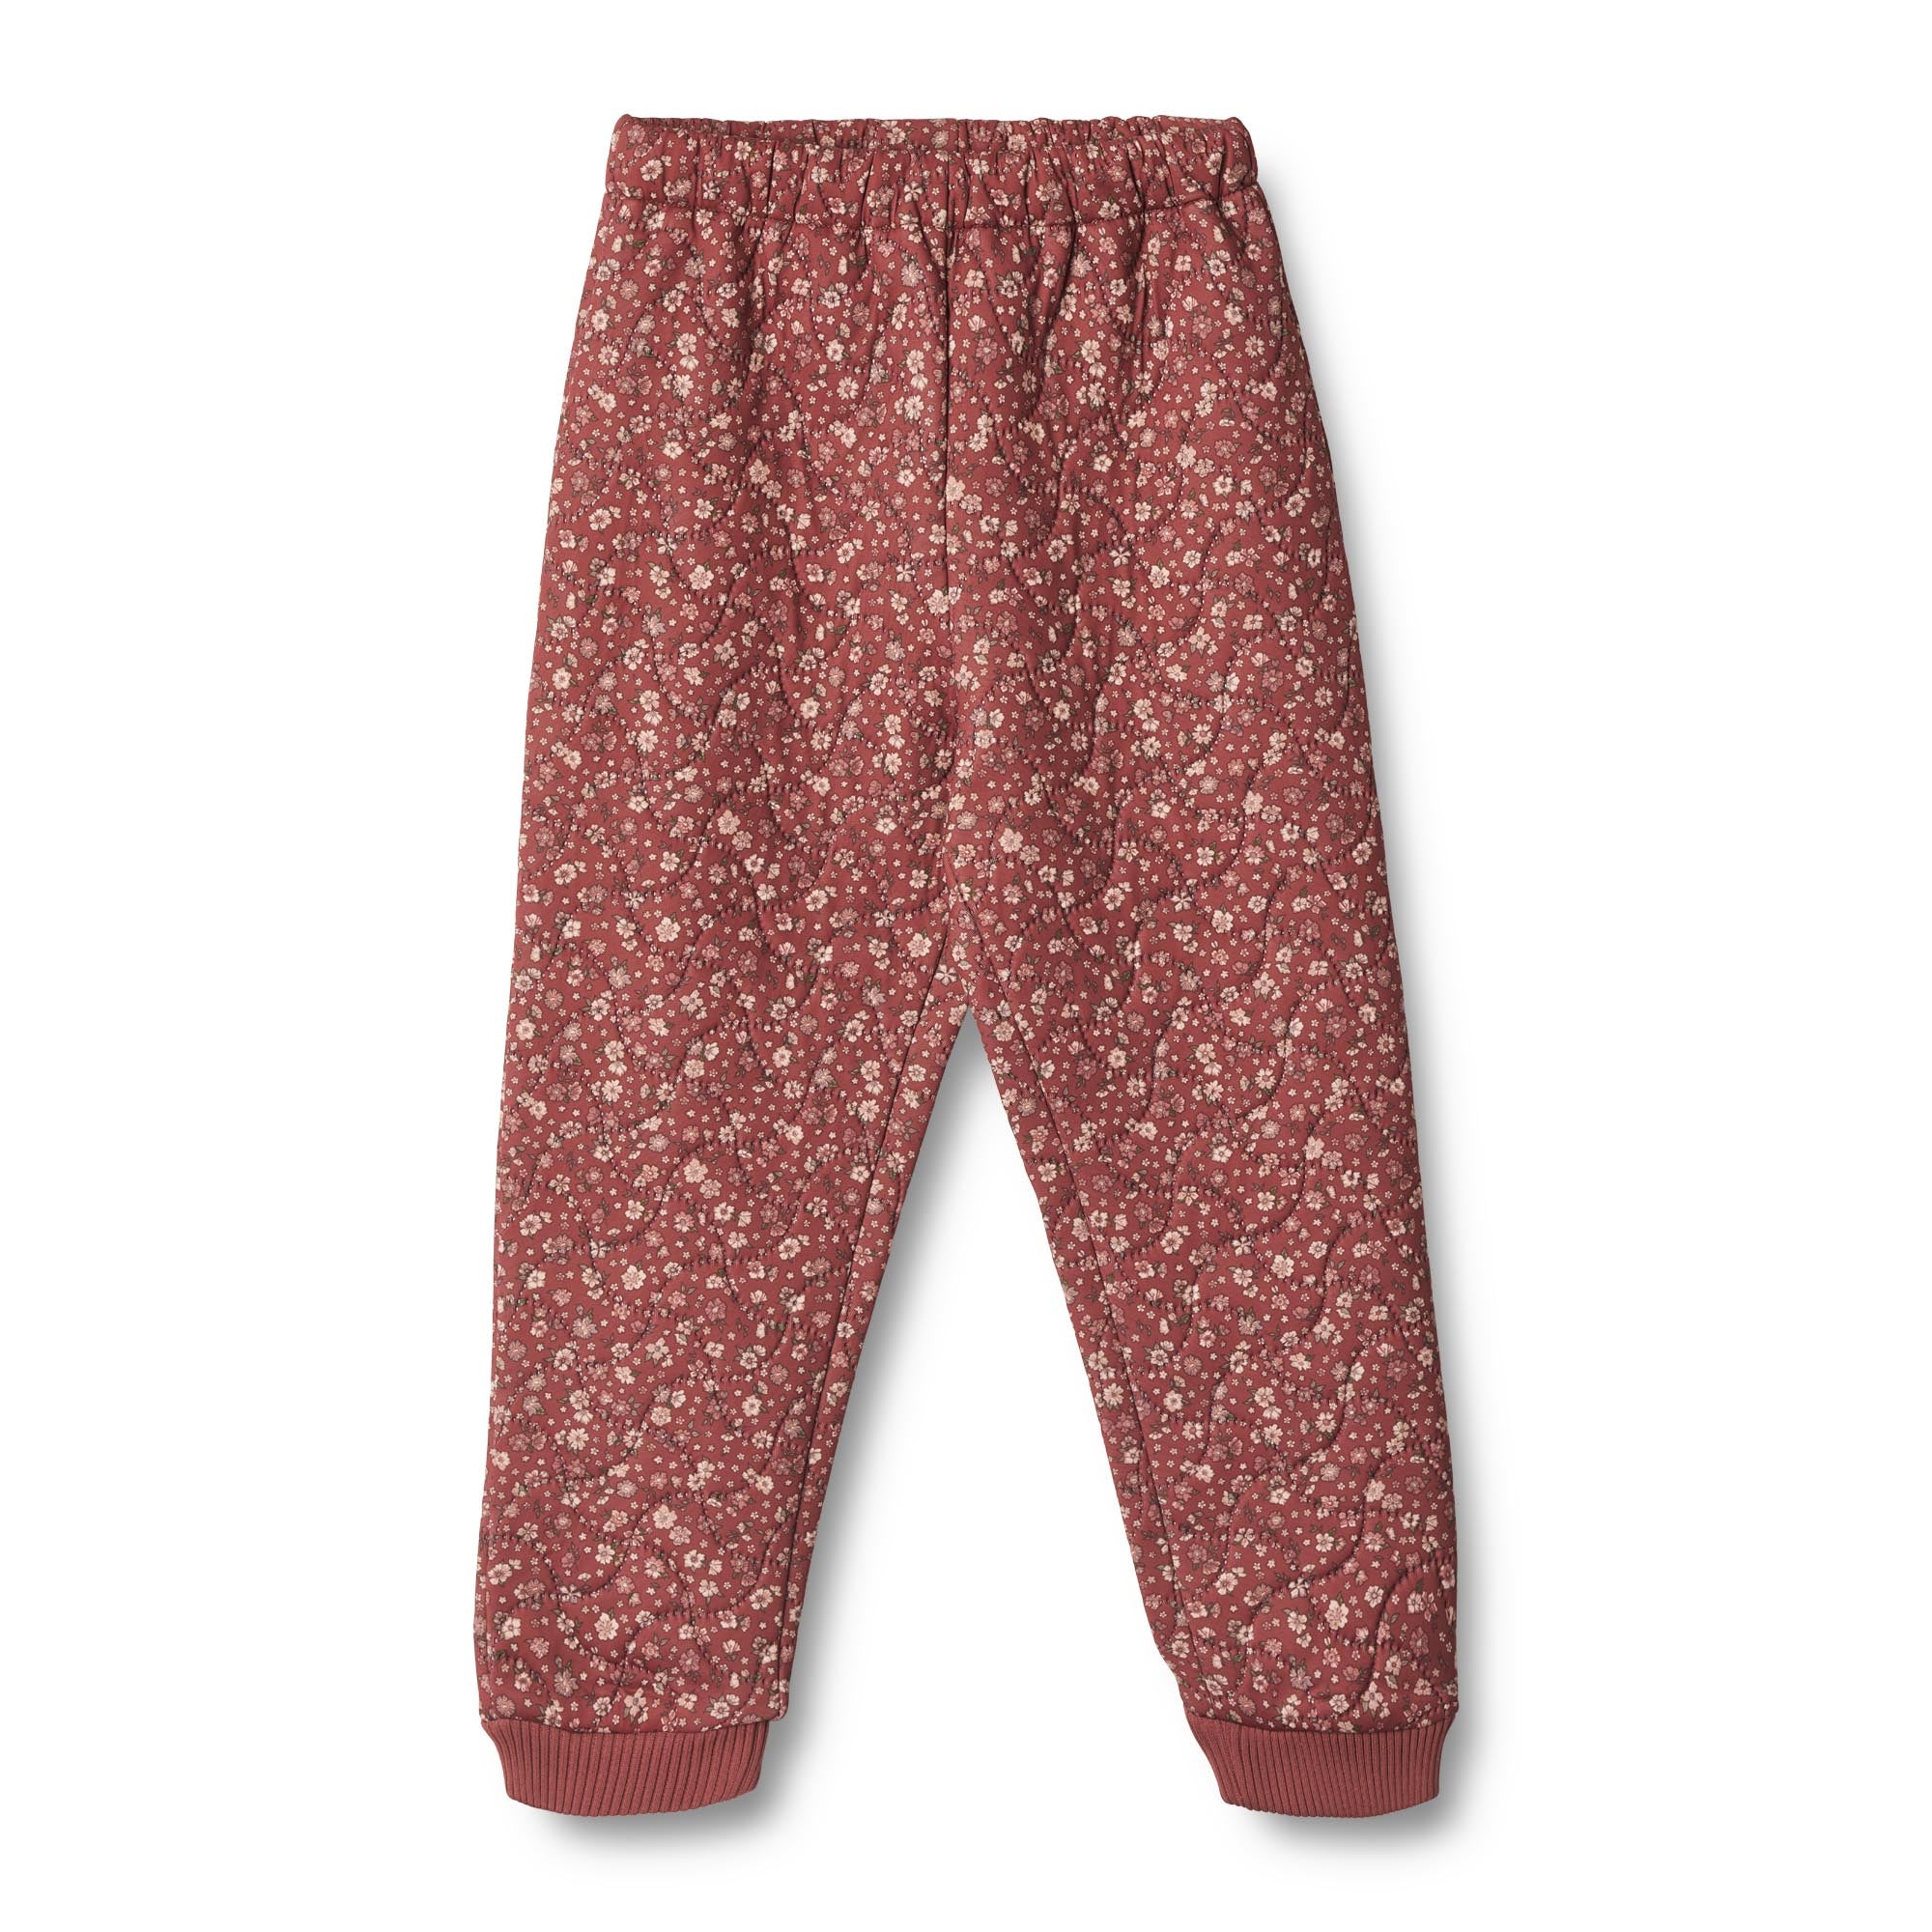 Kid's Dinosaur Print Fleece Jeans, Warm Thermal Denim Pants, Boy's Clothes  For All Seasons